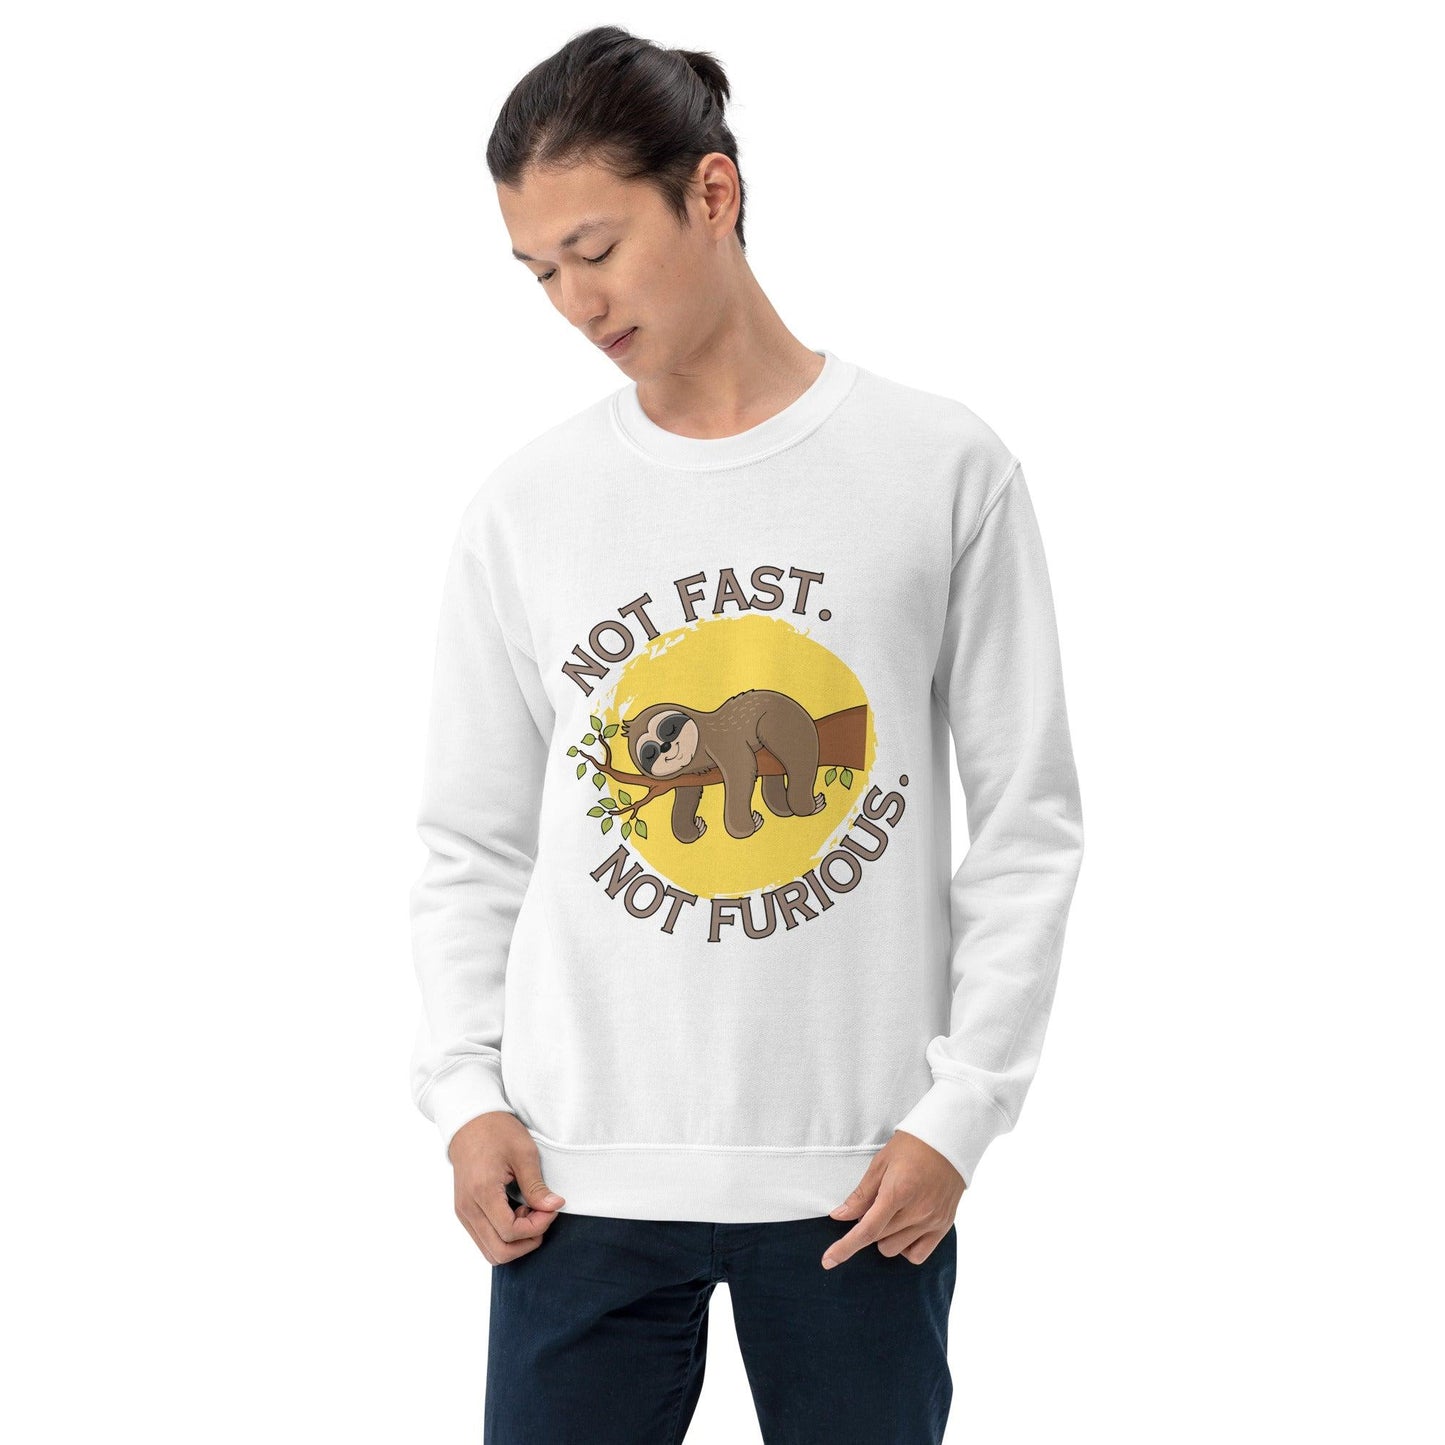 Essential Crew Neck Sweatshirt - Not Fast Not Furious